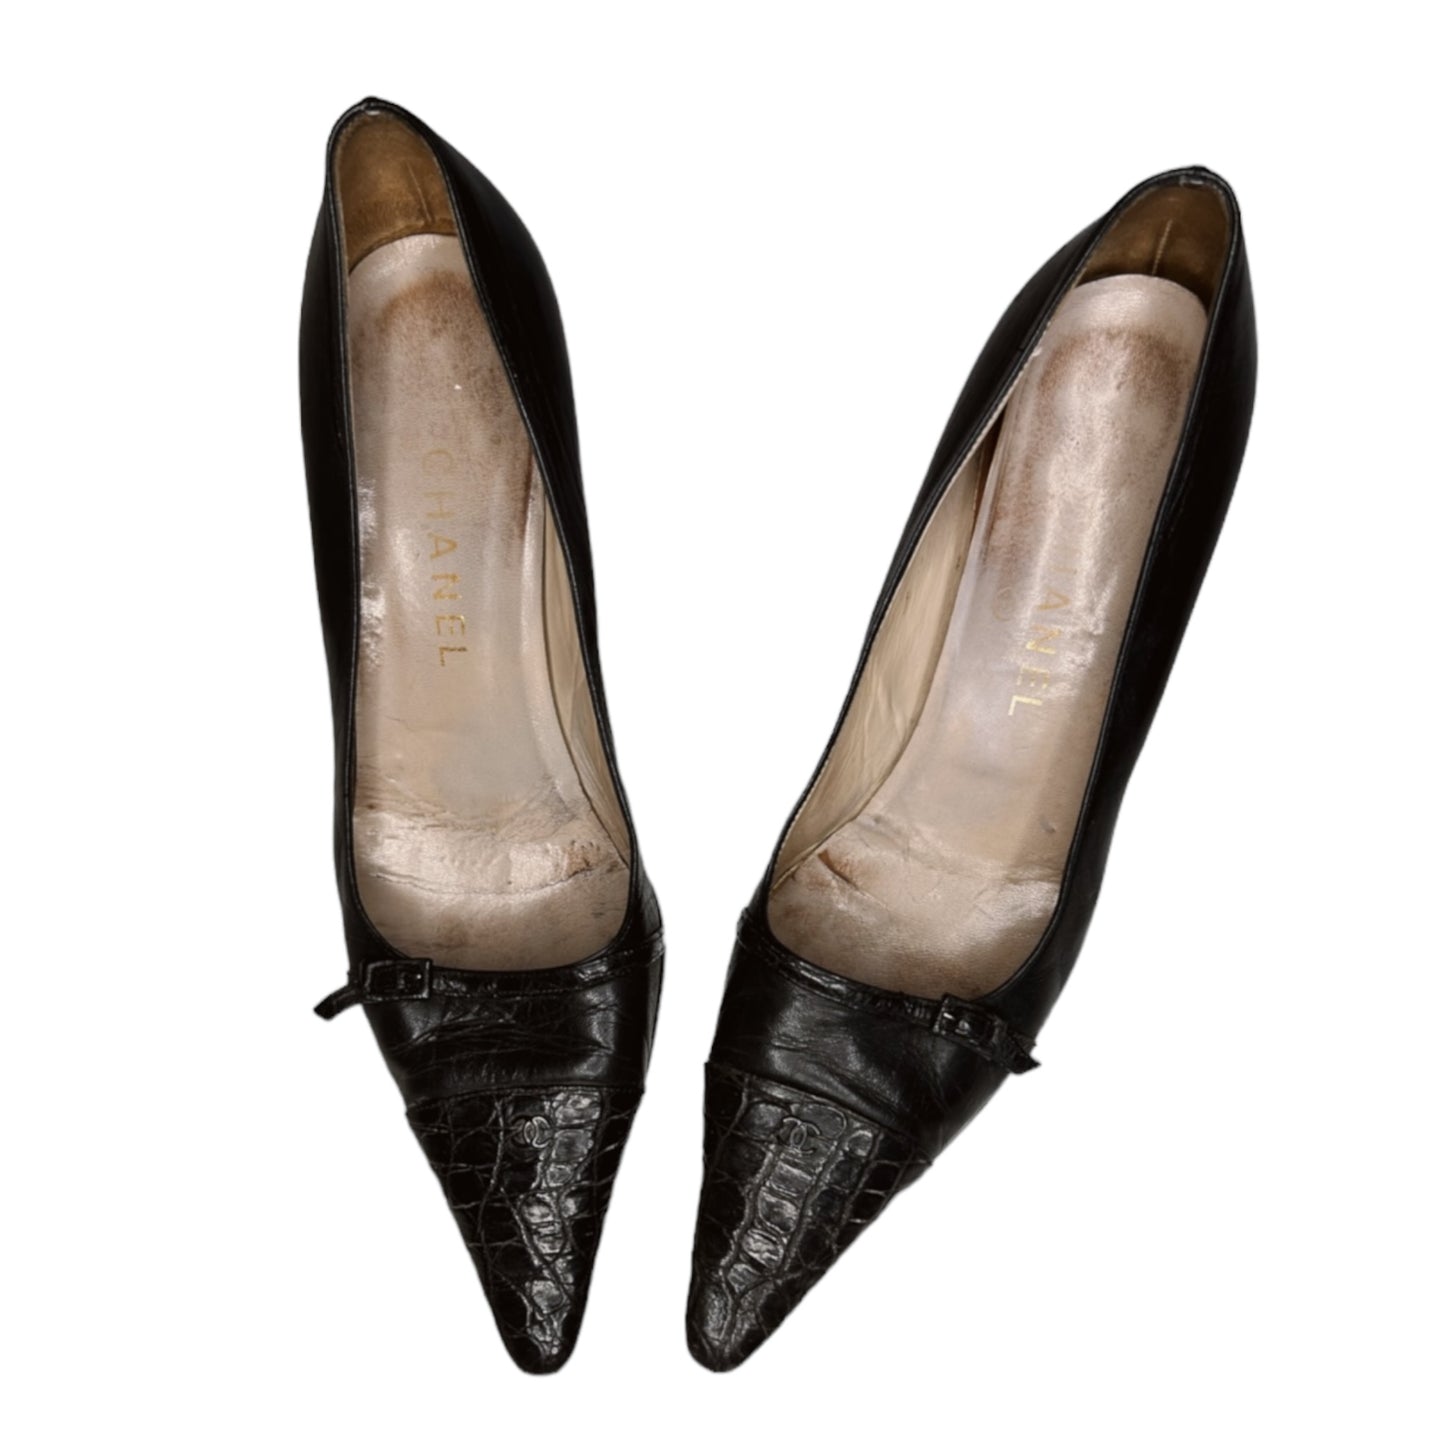 Vintage Chanel black leather kitten heels